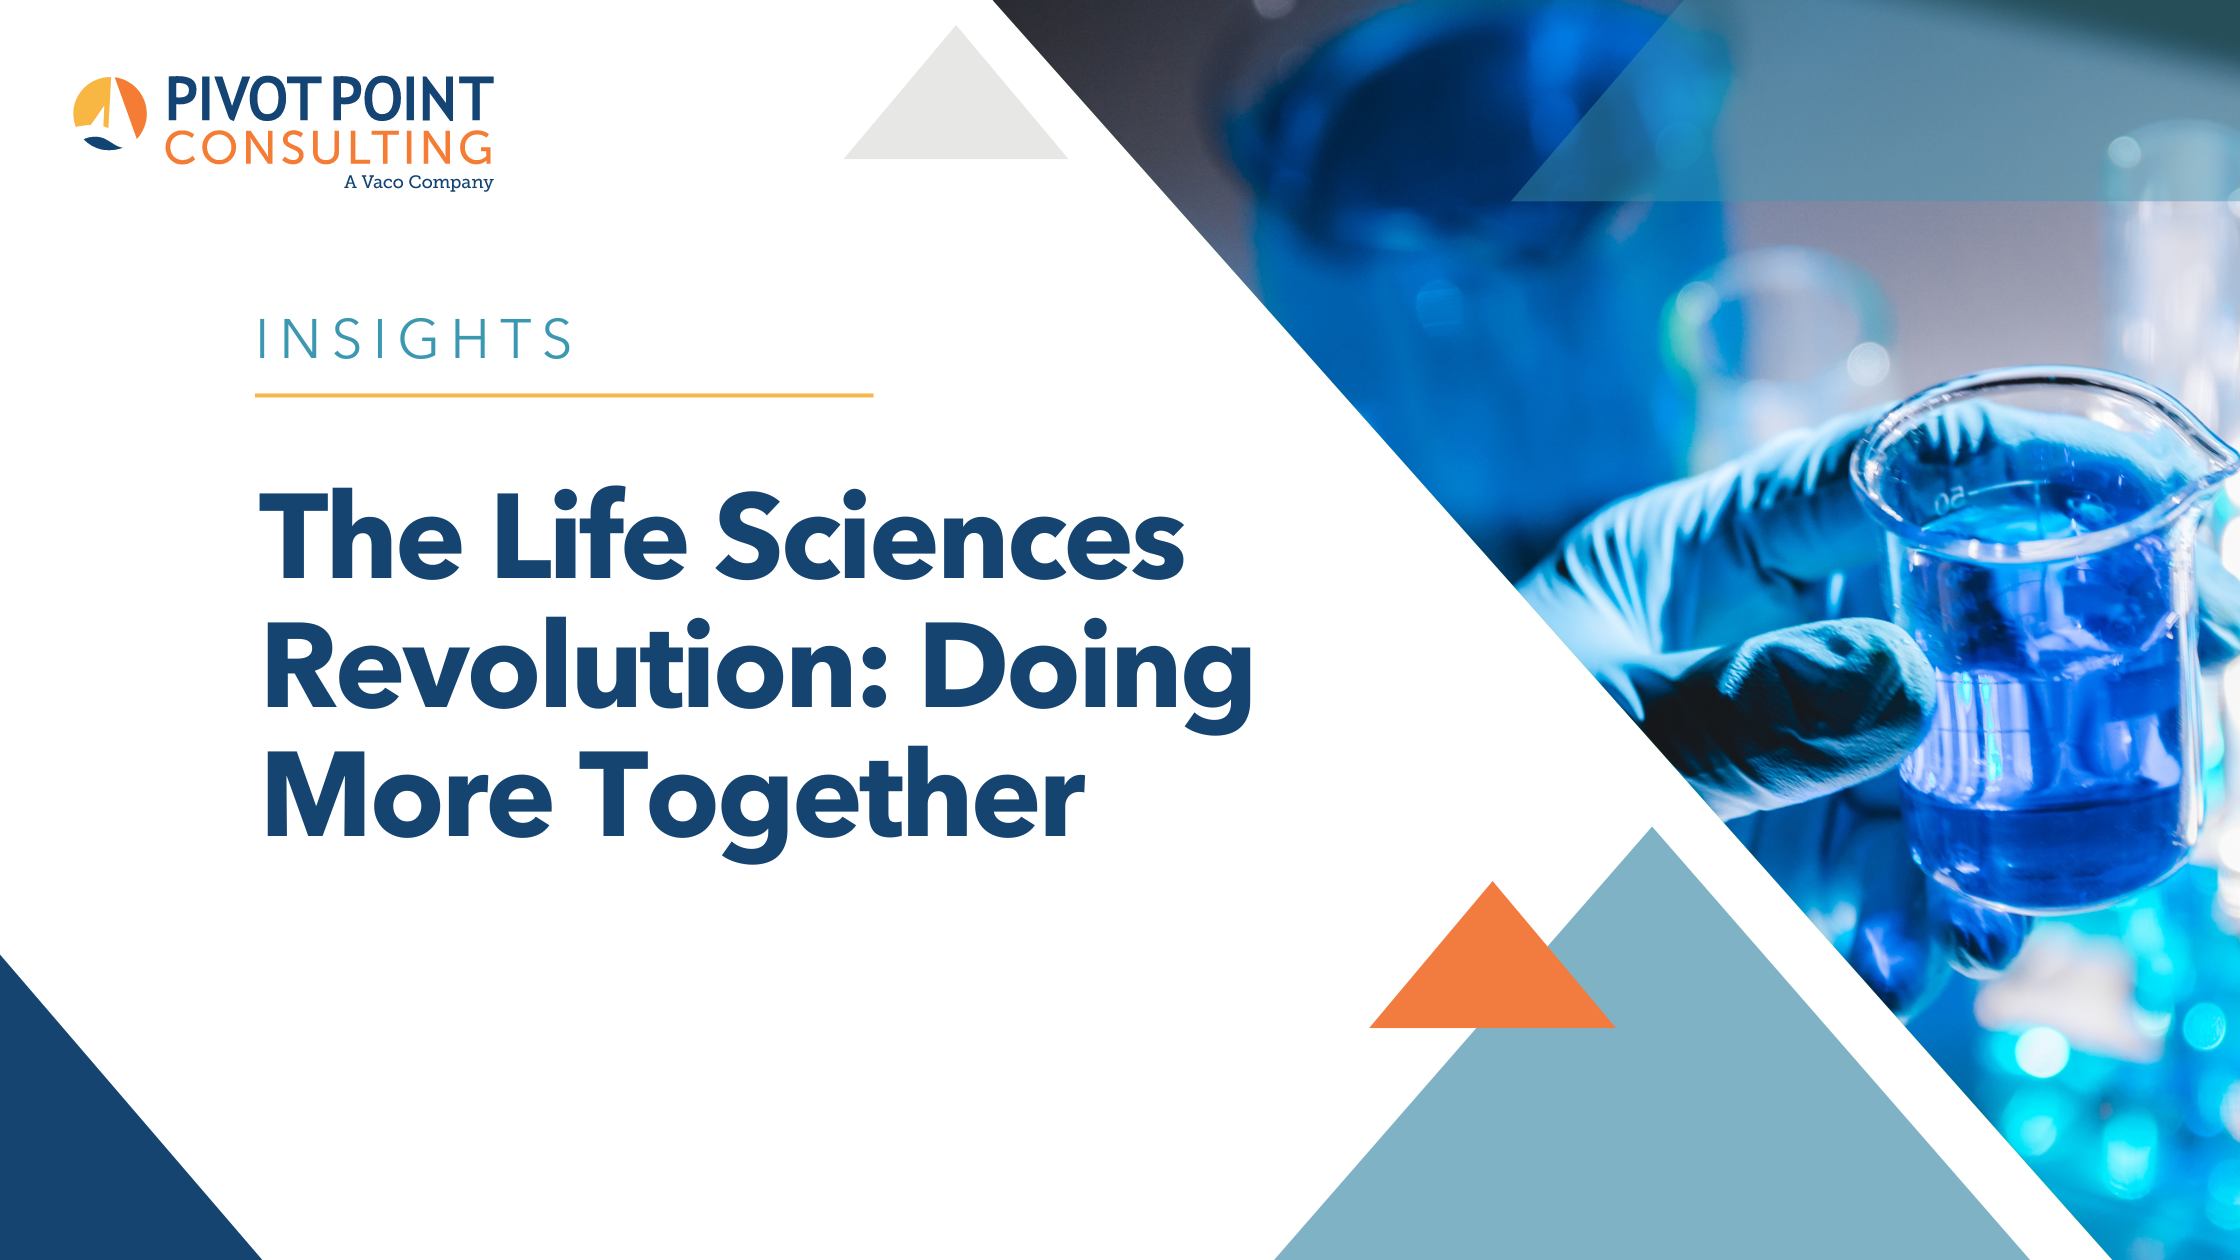 The Life Sciences Revolution: Doing More Together blog post